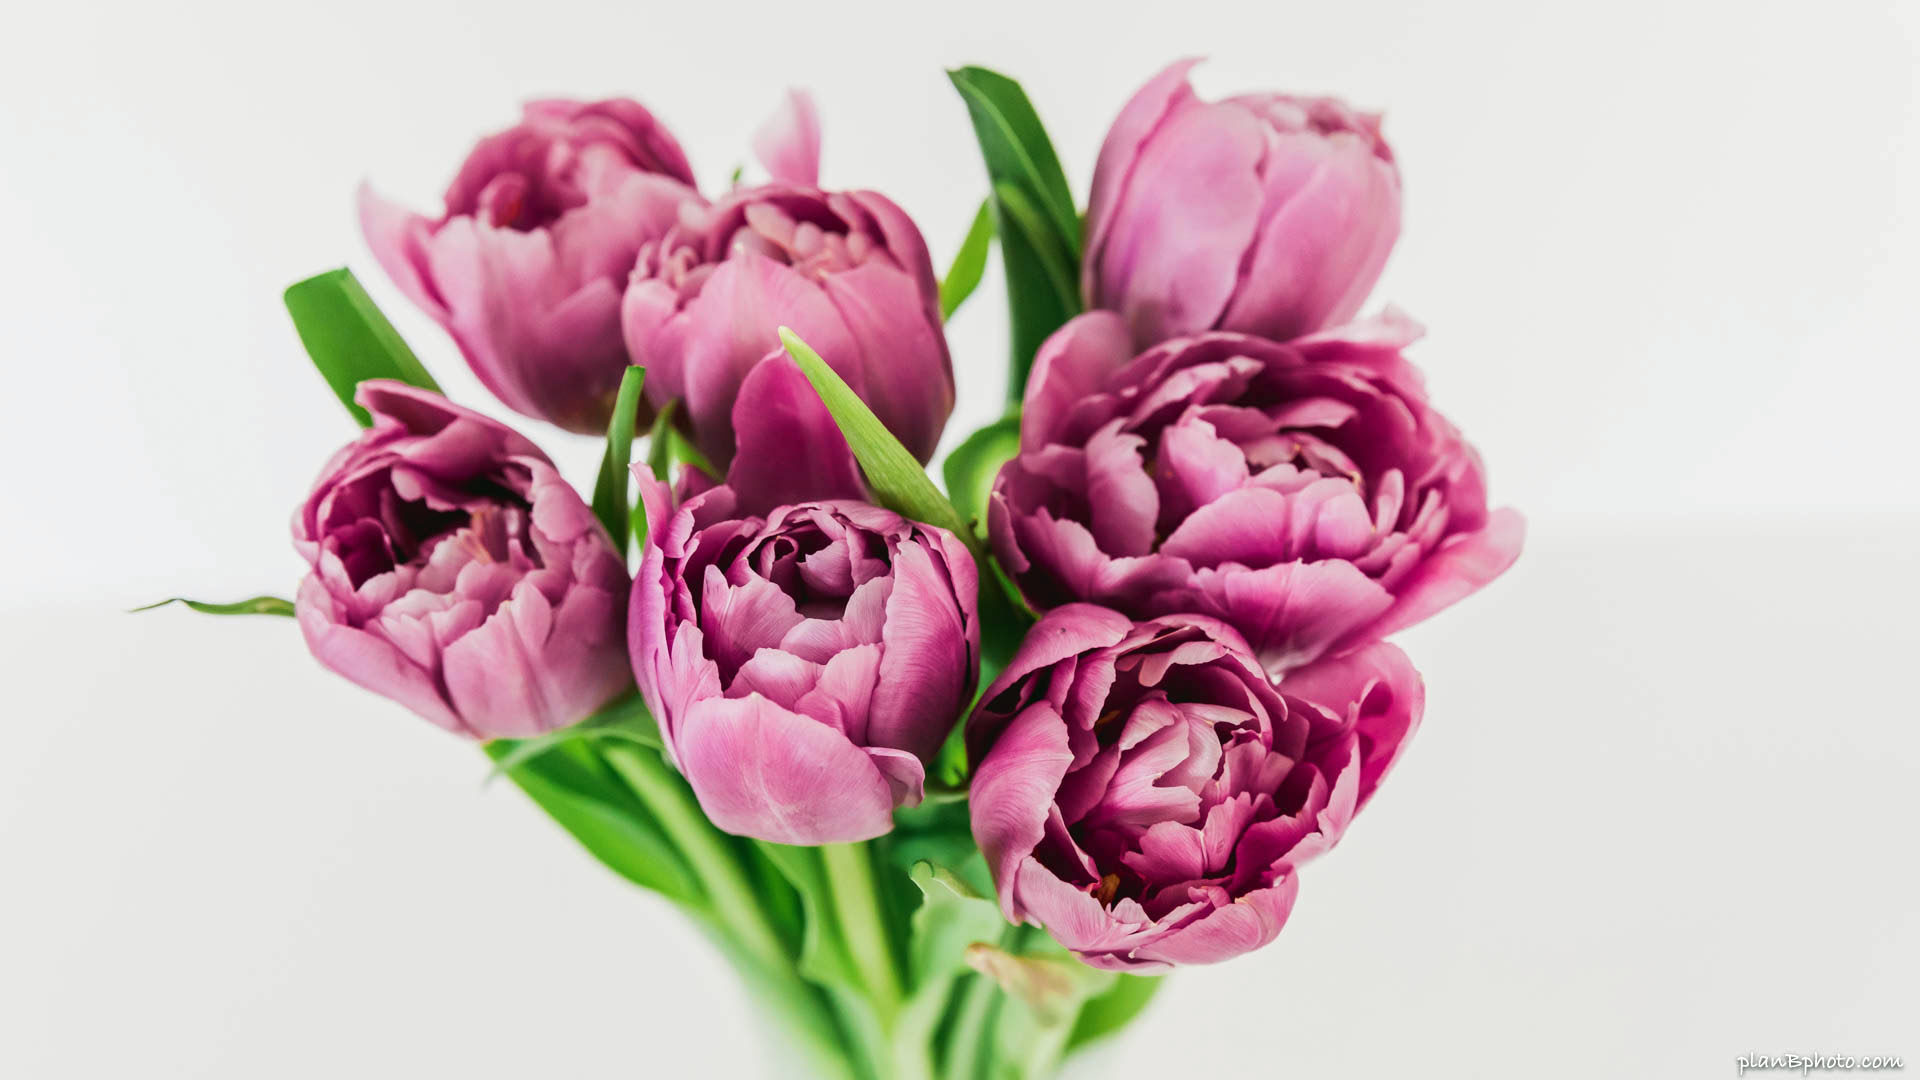 Fluffy purple tulips